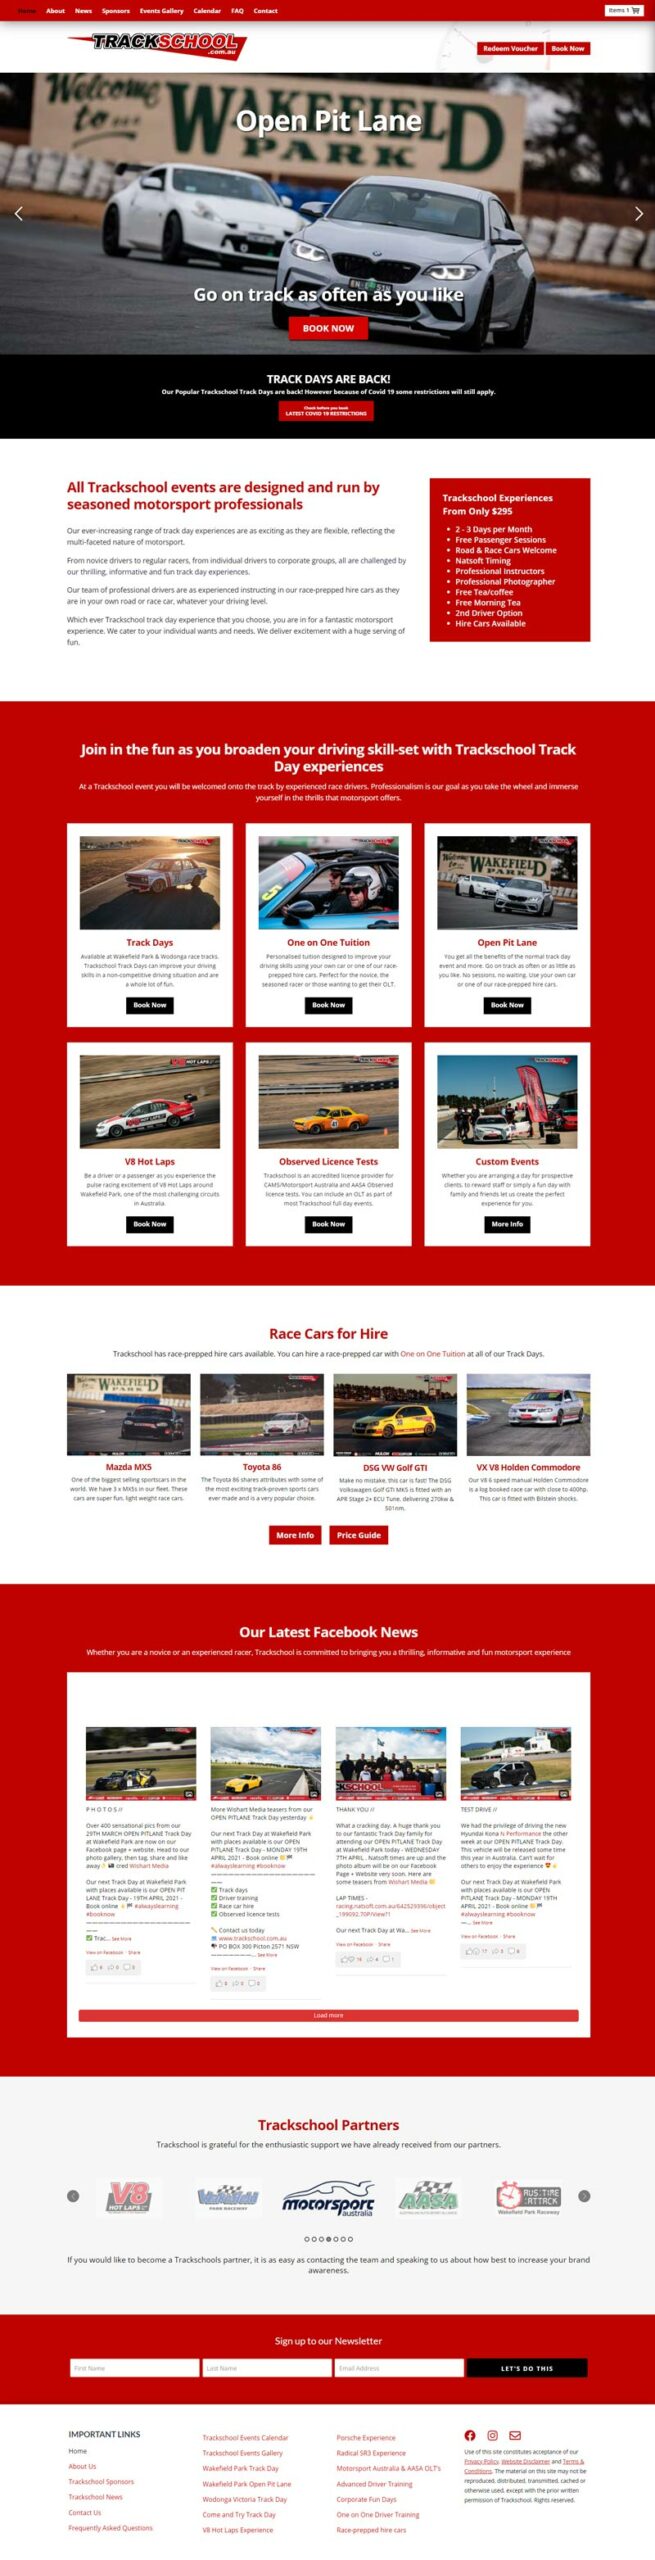 Trackschool website designed by Big Red Bus Websites - ezample 1